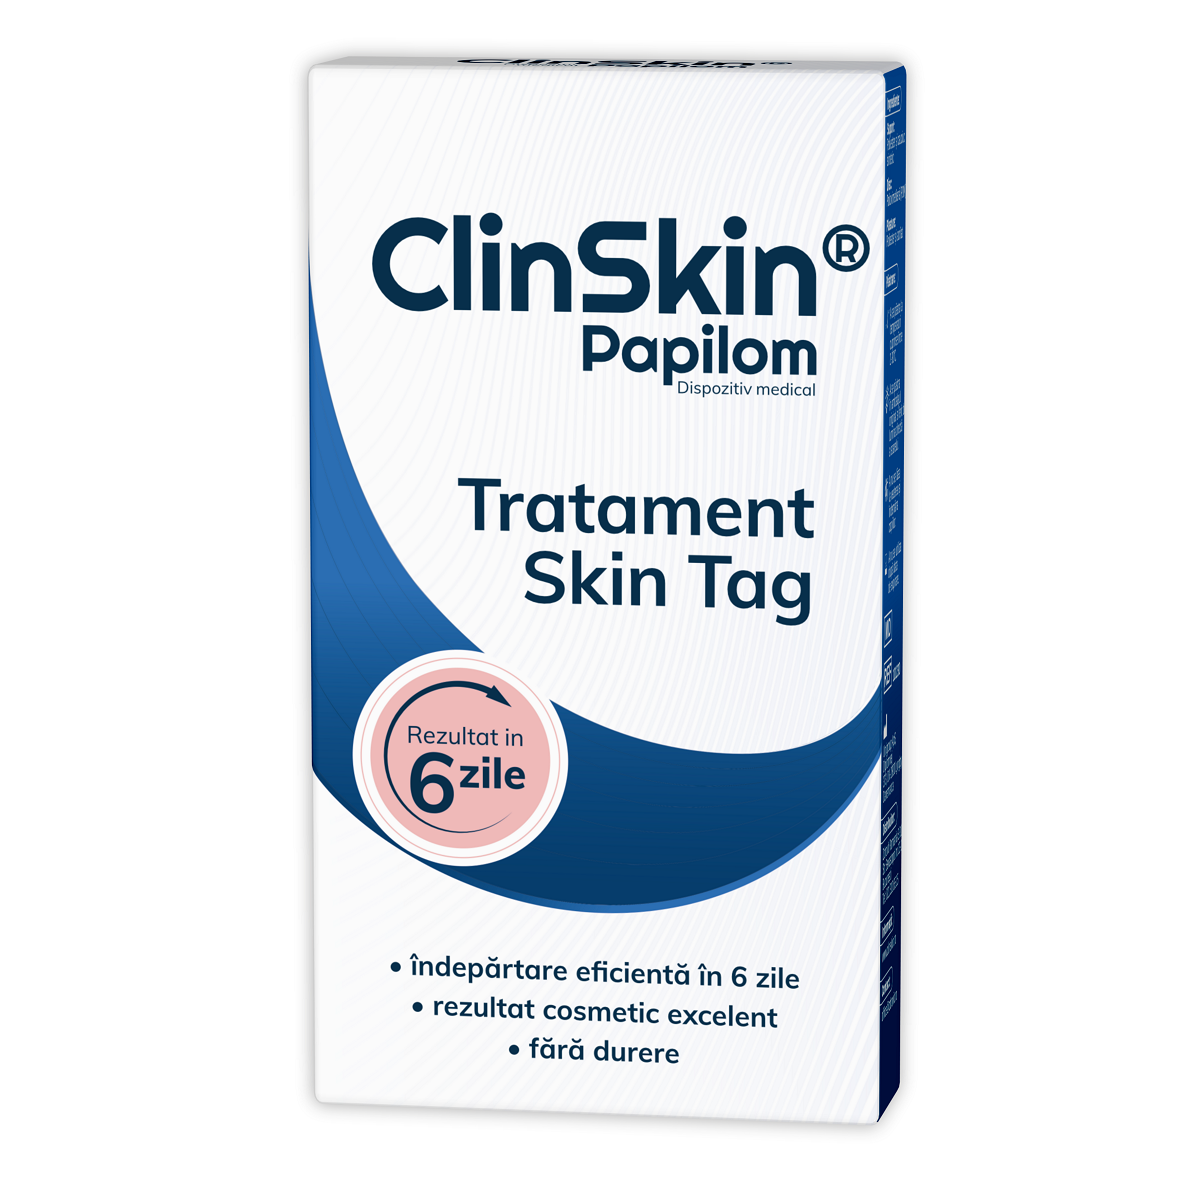 Plasturi si pansamente - ClinSkin Papilom Tratament Skin Tag, Zdrovit, nordpharm.ro